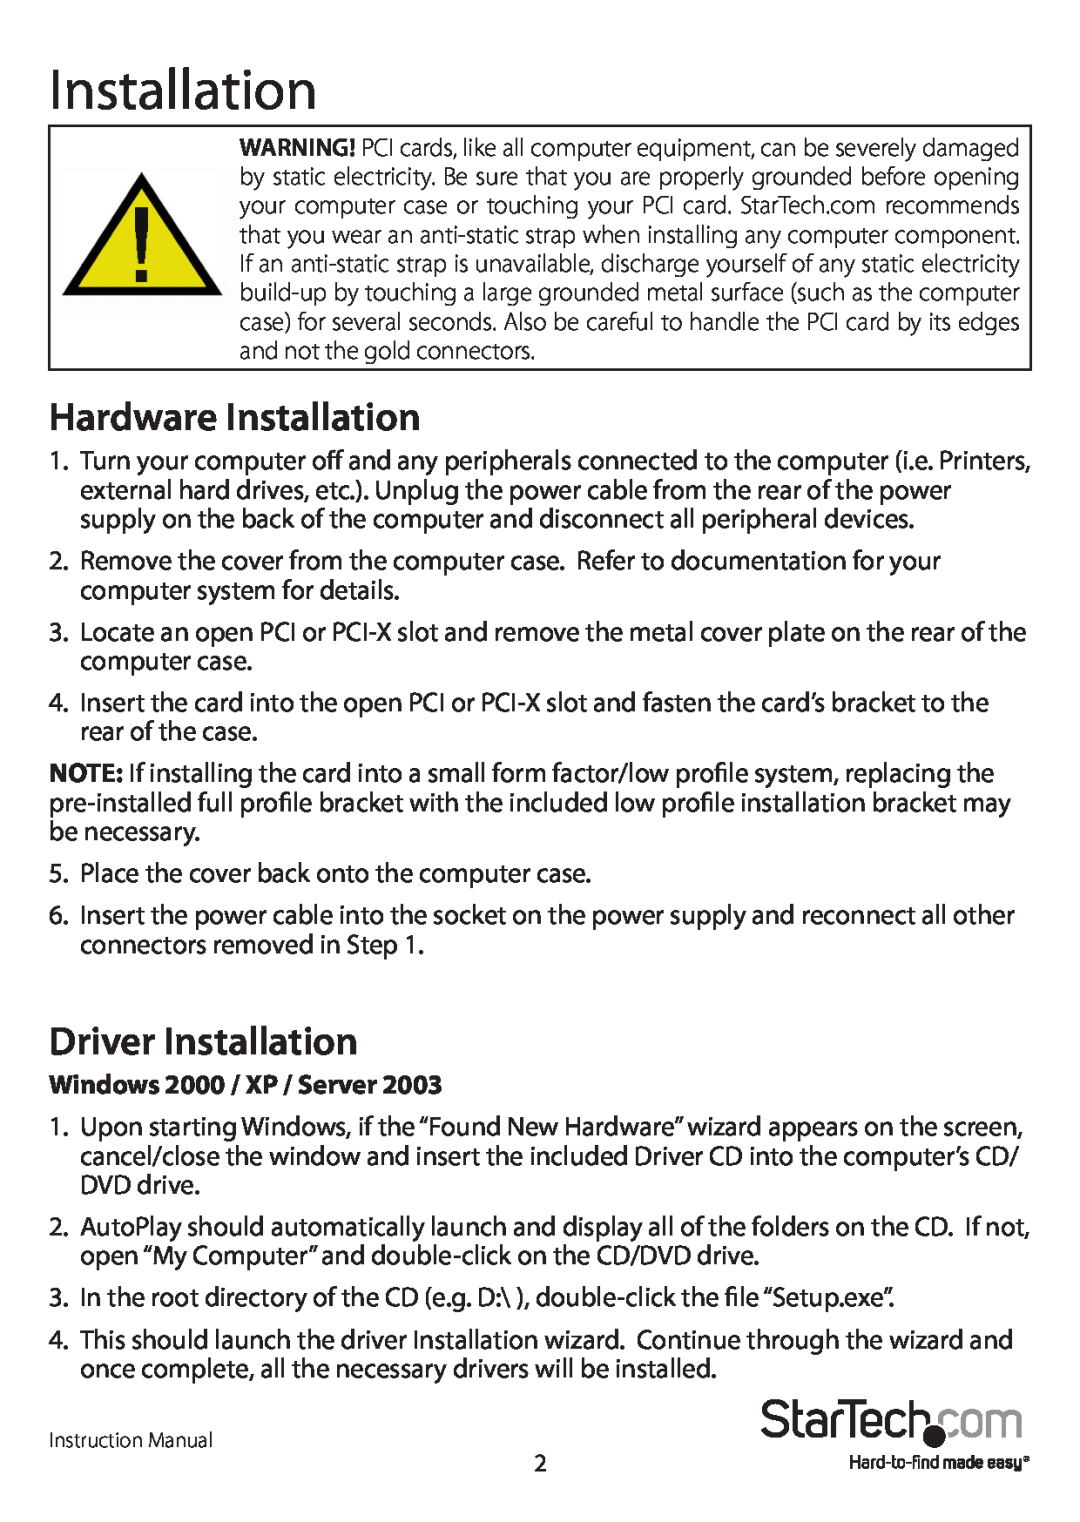 StarTech.com PCISAT2IDE1 manual Hardware Installation, Driver Installation, Windows 2000 / XP / Server 